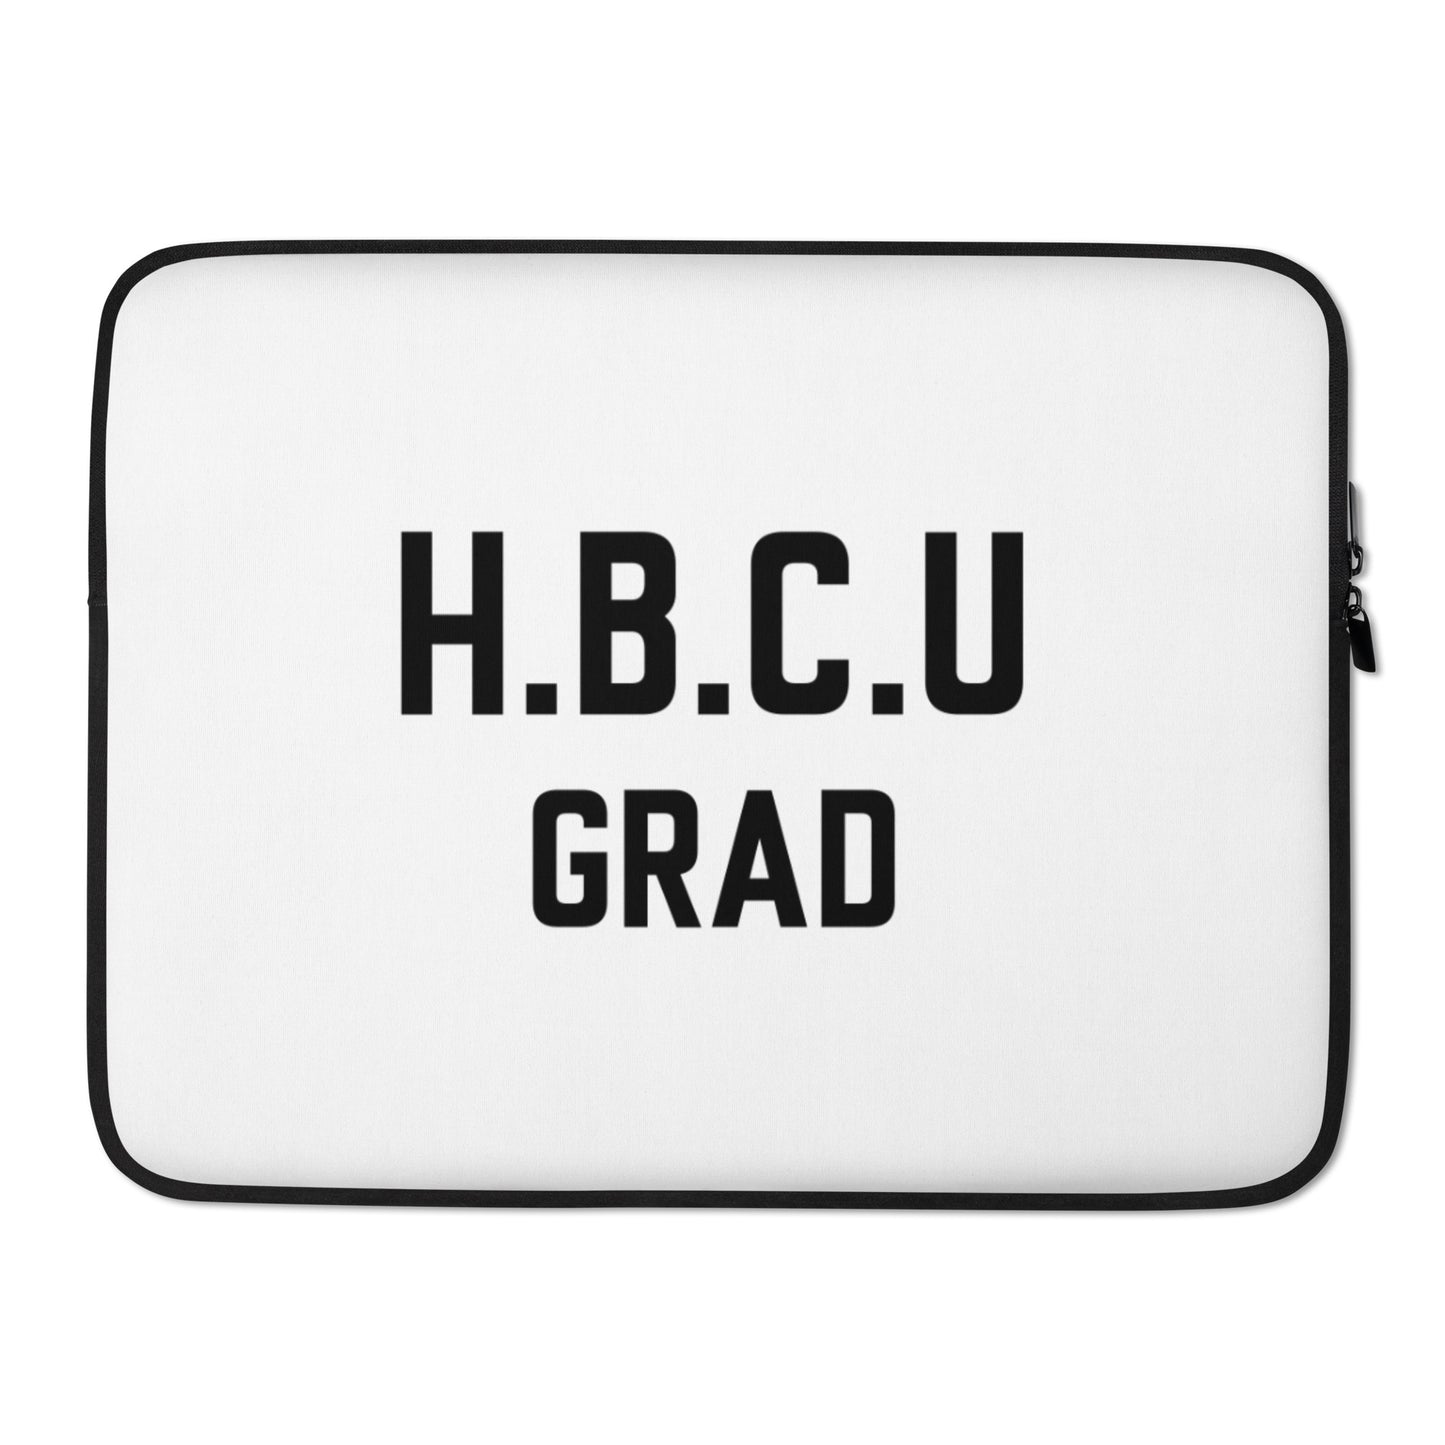 HBCU Grad Laptop Sleeve